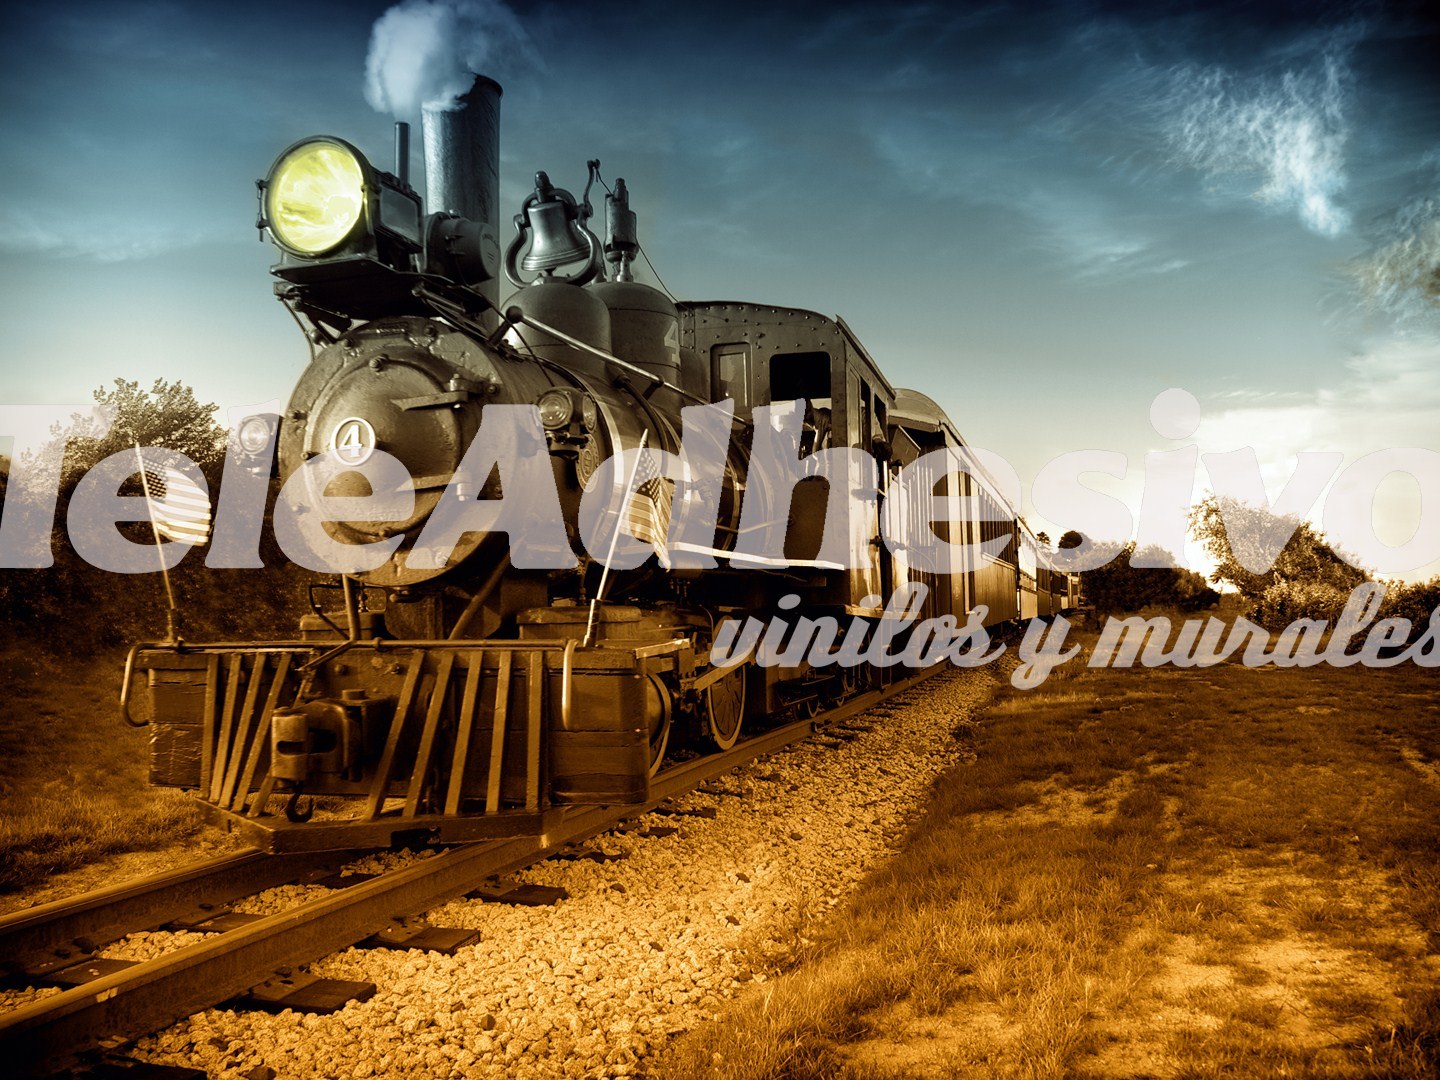 Poster xxl: Locomotive ouest